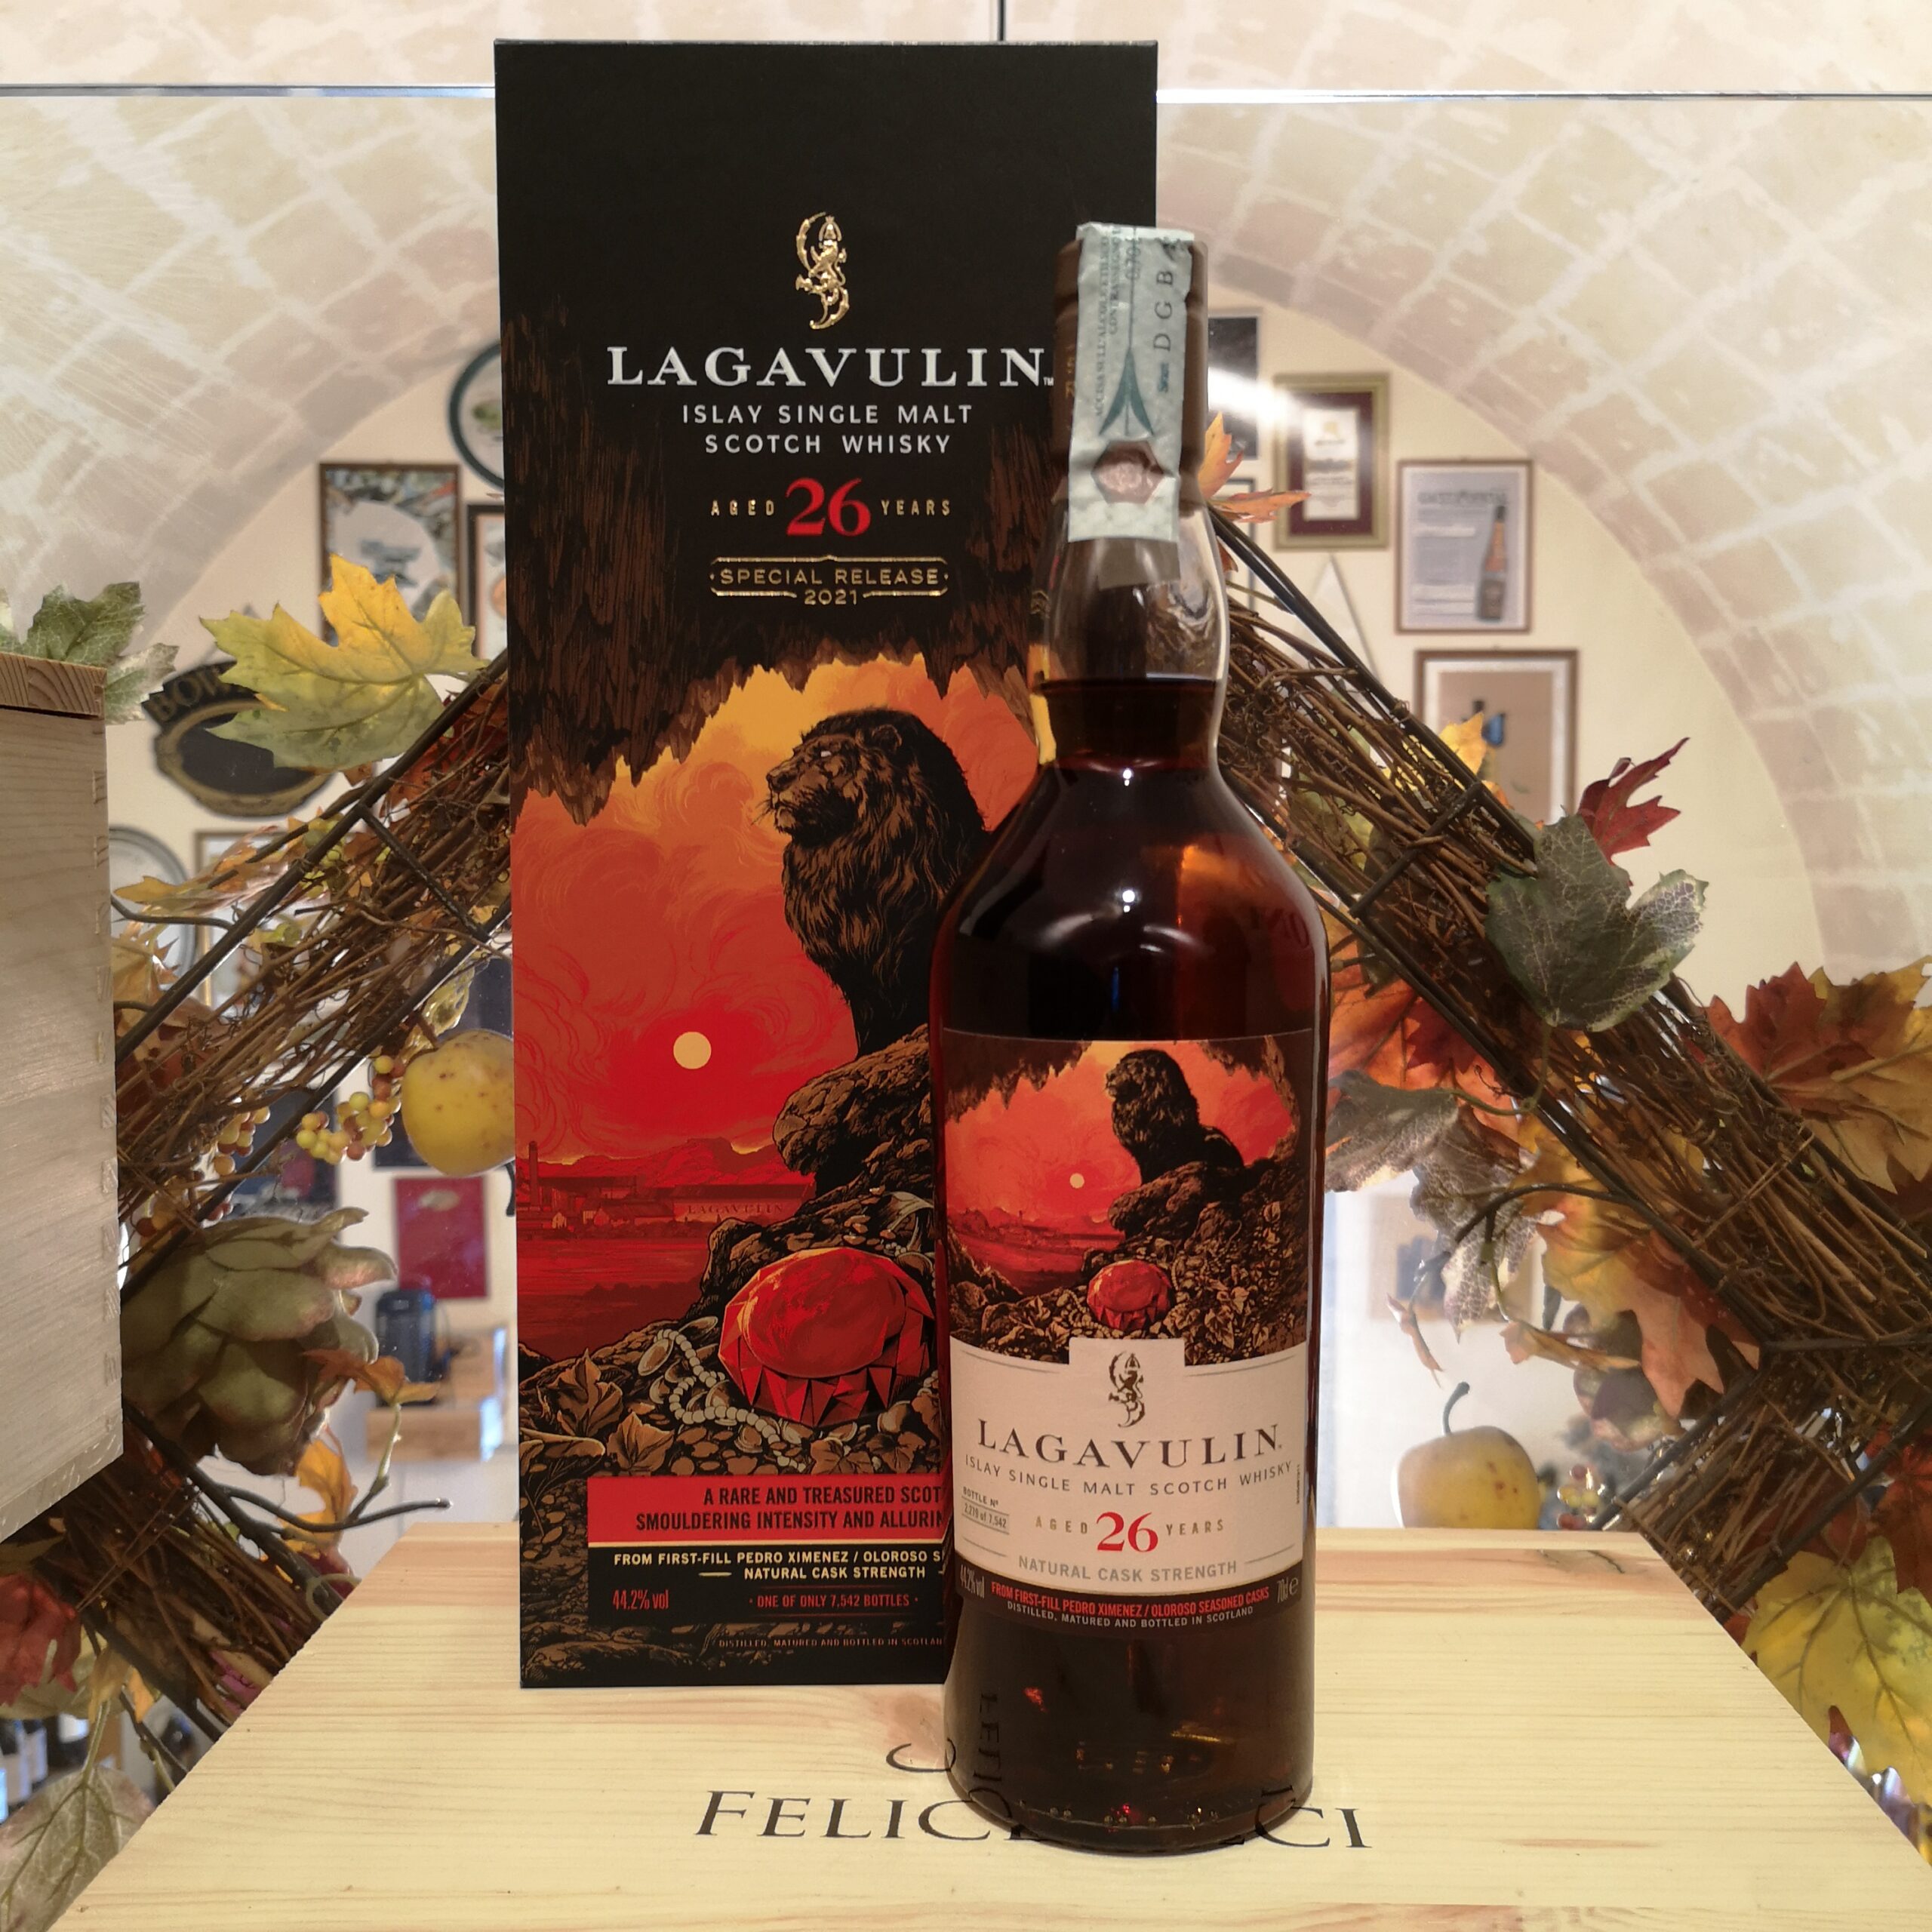 Lagavulin Islay Single Malt Scotch Whisky 26 YO Special Release 2021